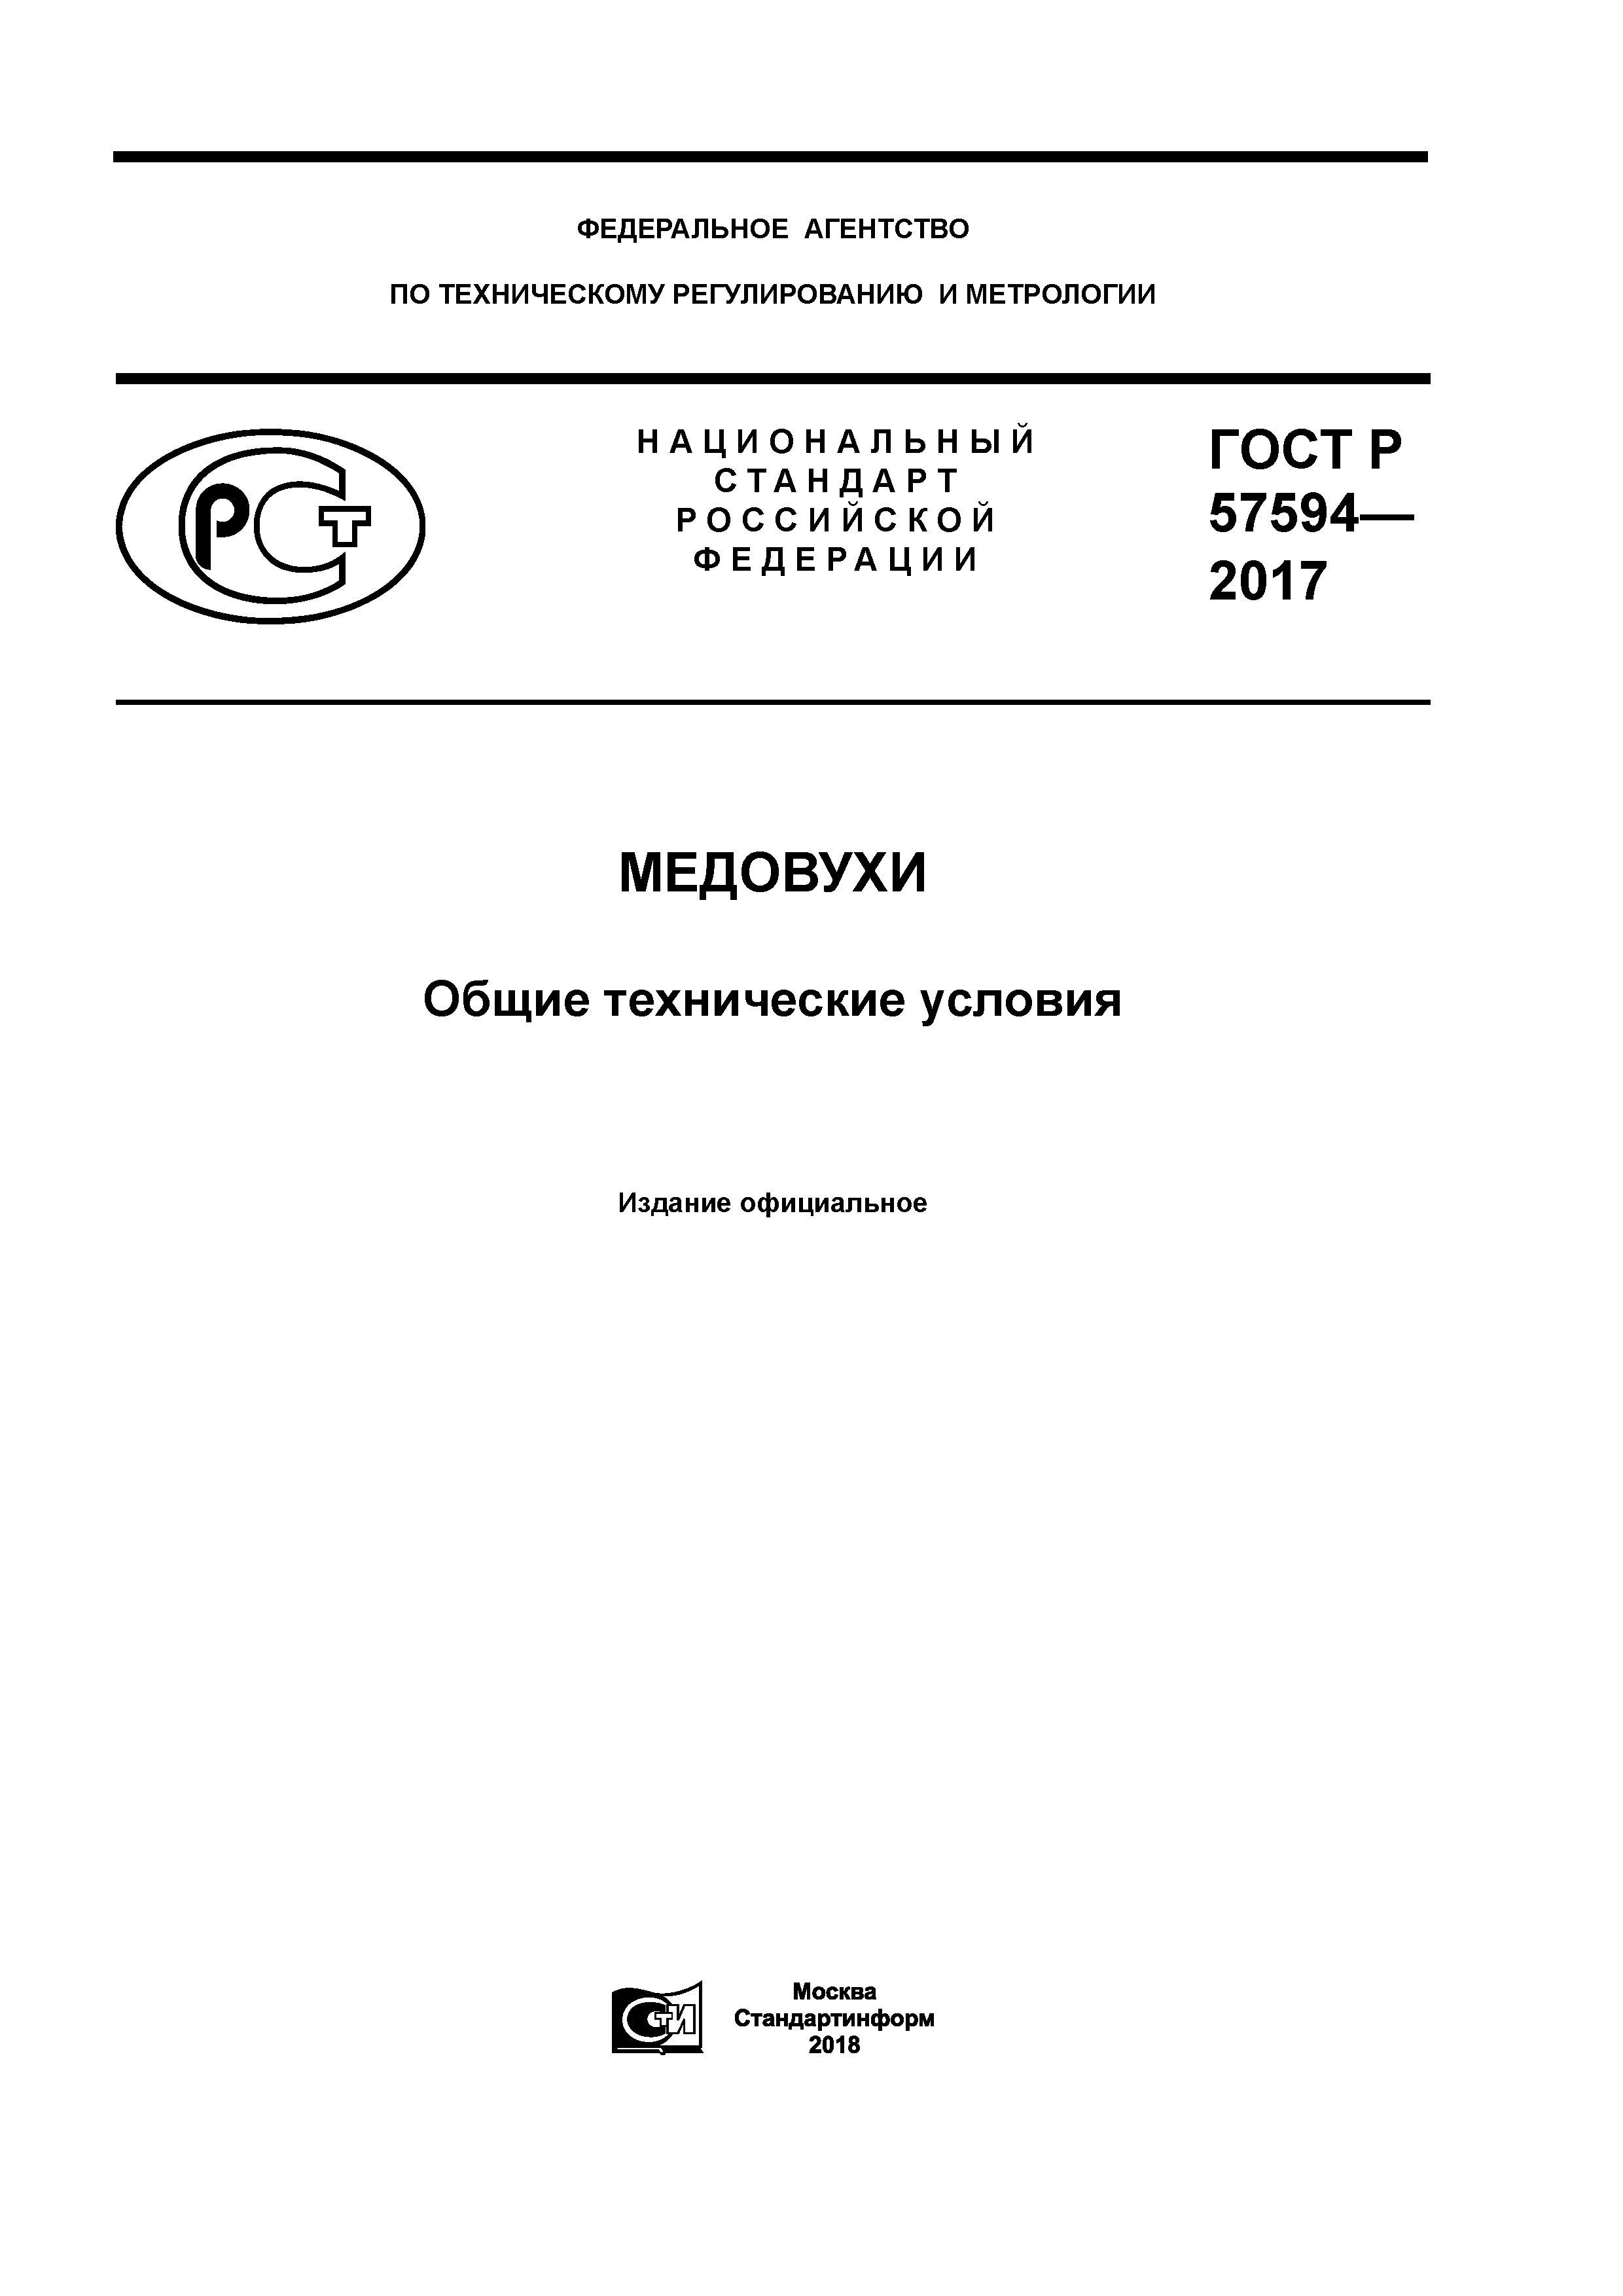 ГОСТ Р 57594-2017